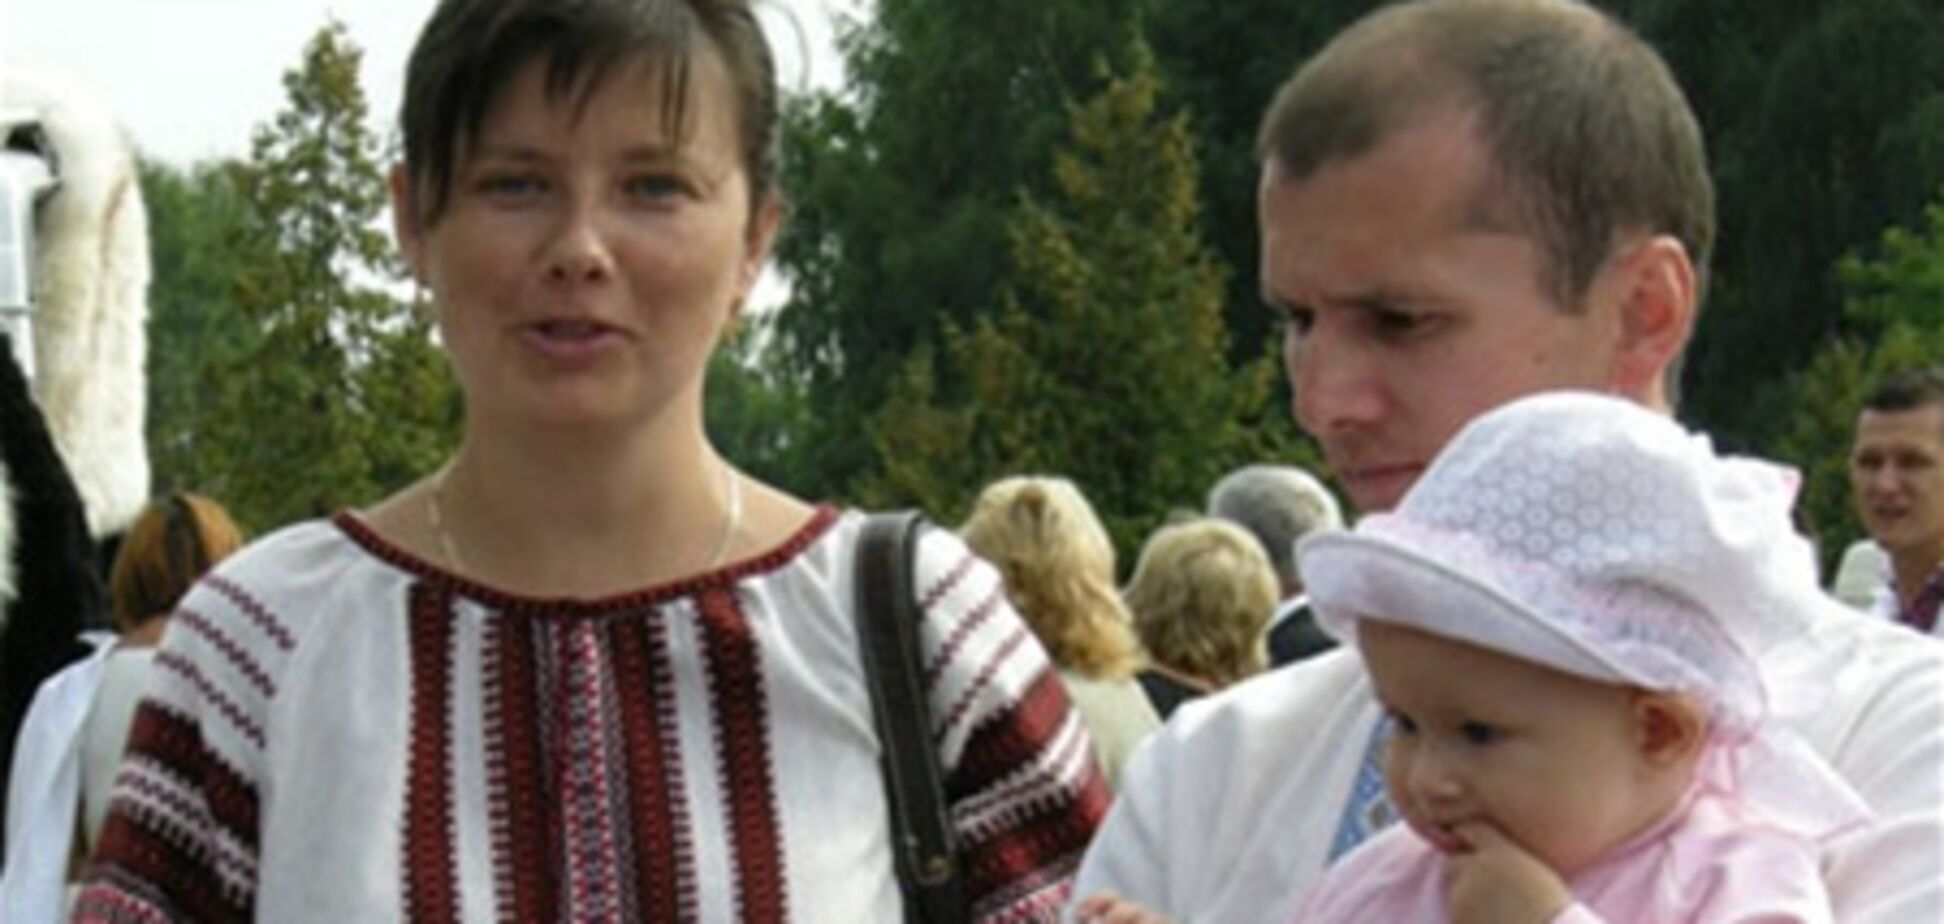 63% мешканців України вважають себе щасливими людьми